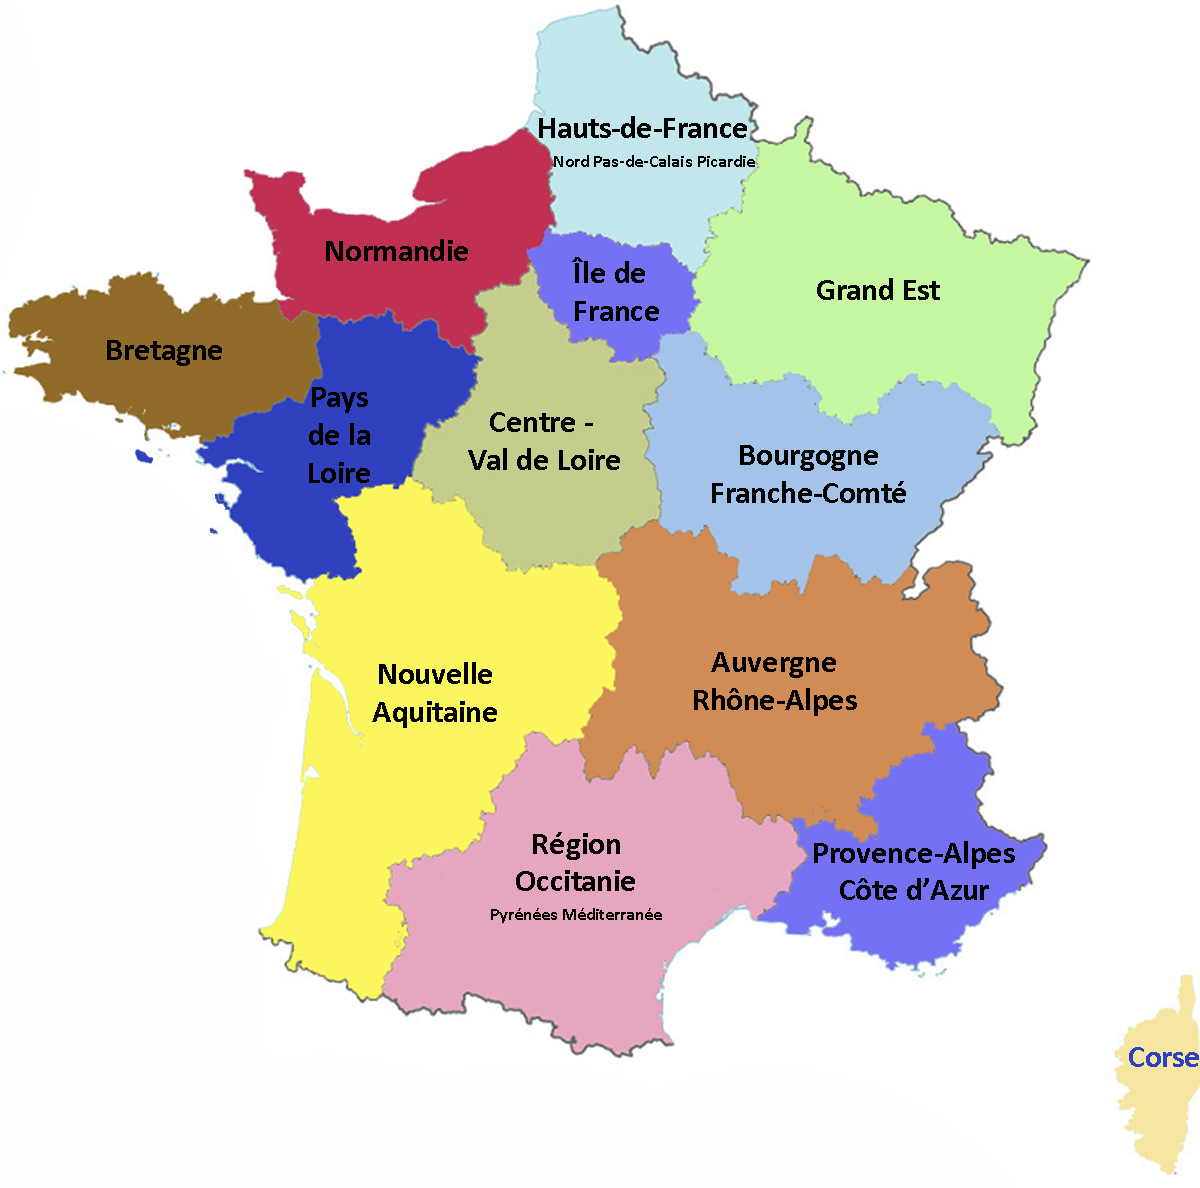 Carte de France Regions. Регионы Франции на карте. Регионы Франции на французском языке с переводом. Карта Франции на французском языке с регионами. Region de france